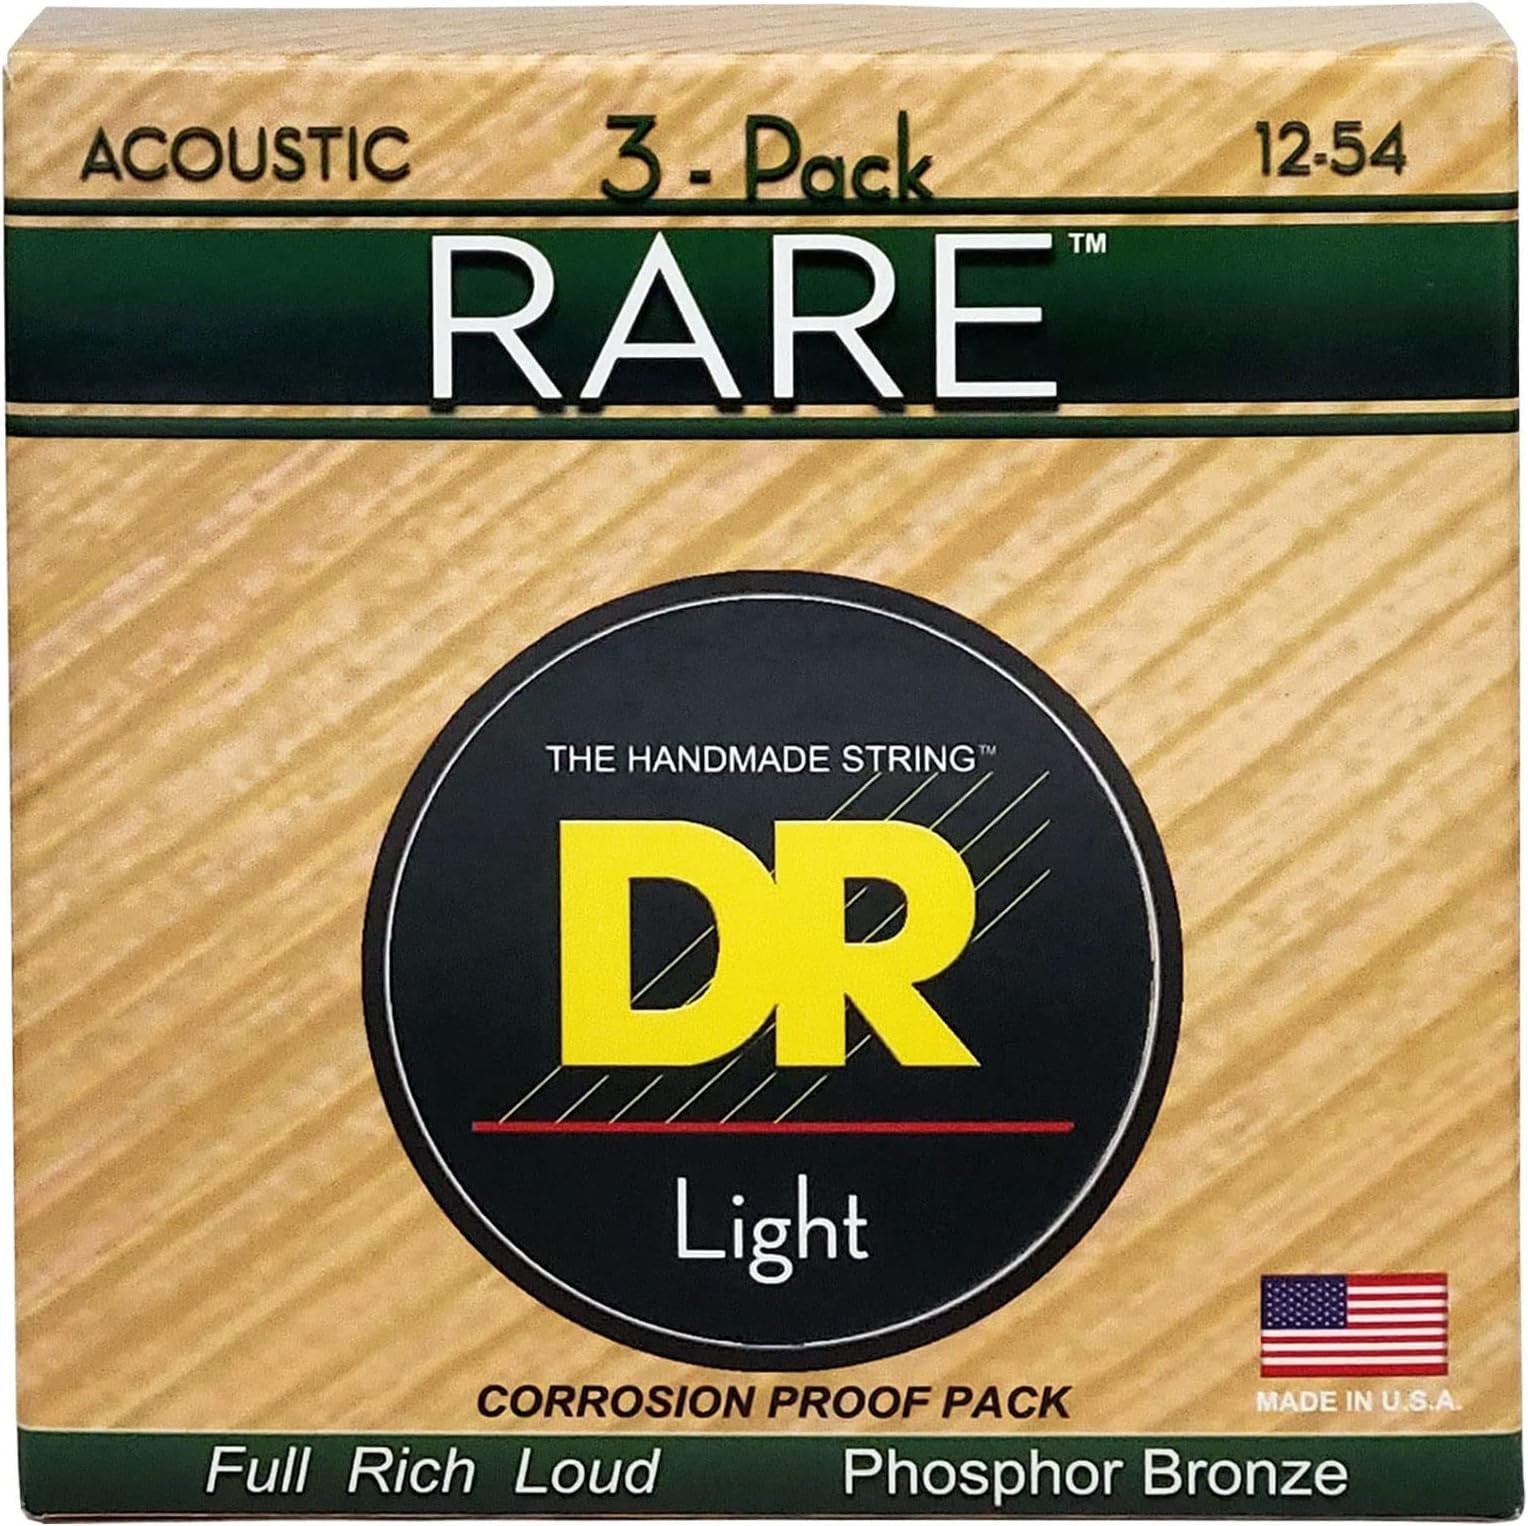 RPM-12-3PK Rare Phosphor Bronze Acoustic Guitar Strings, Light 12-54, 3-Pack